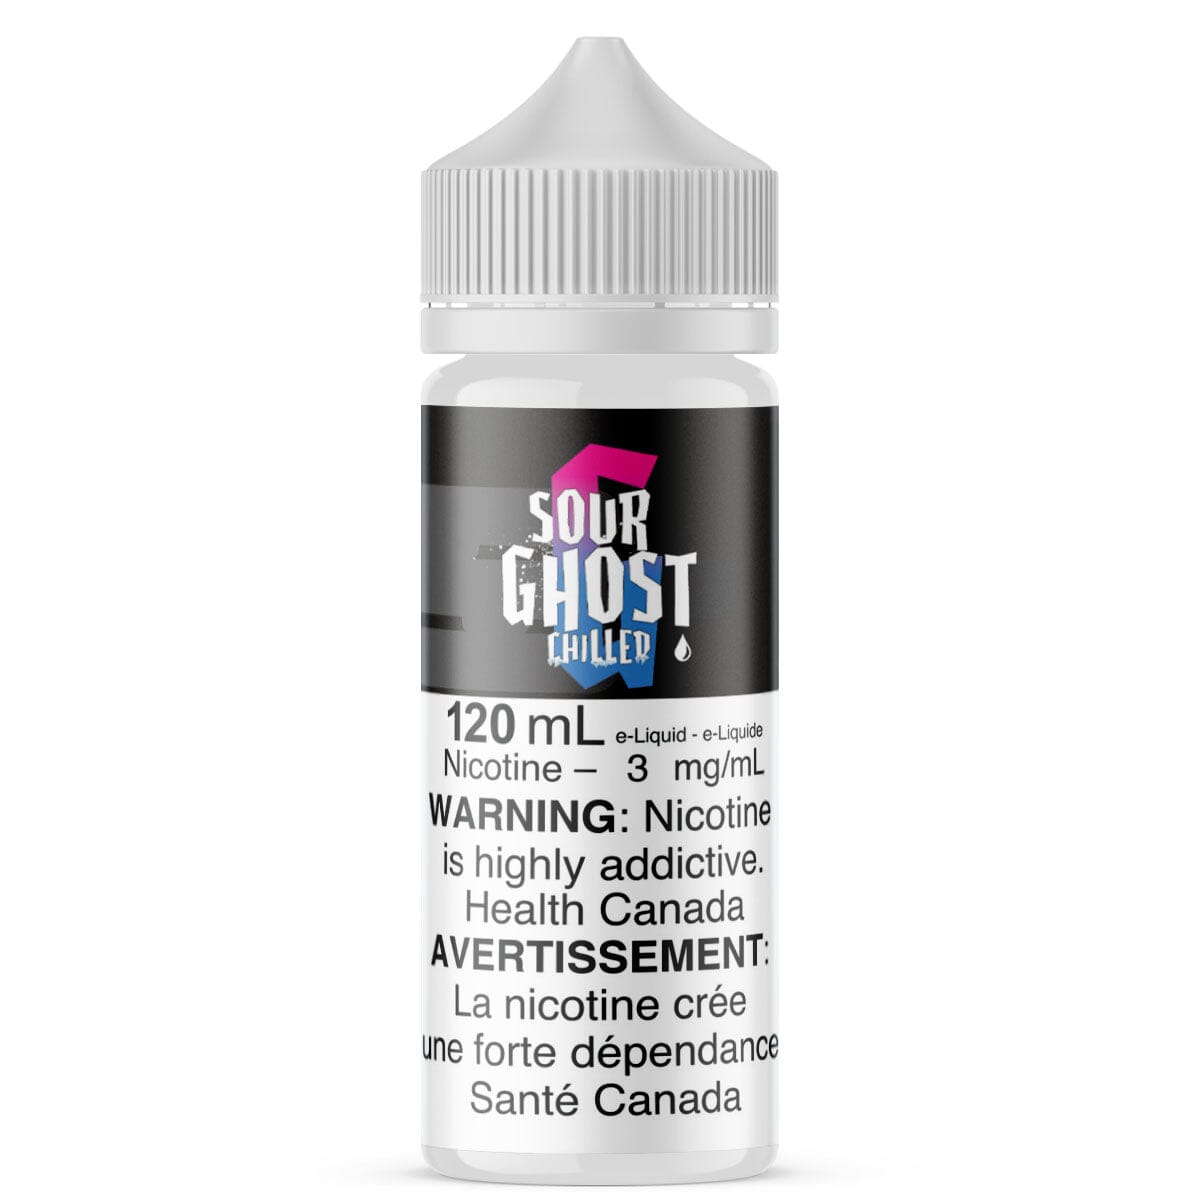 Sour Ghost Chilled E Liquid E-Liquid Sour Ghost 120mL 3mg/mL 